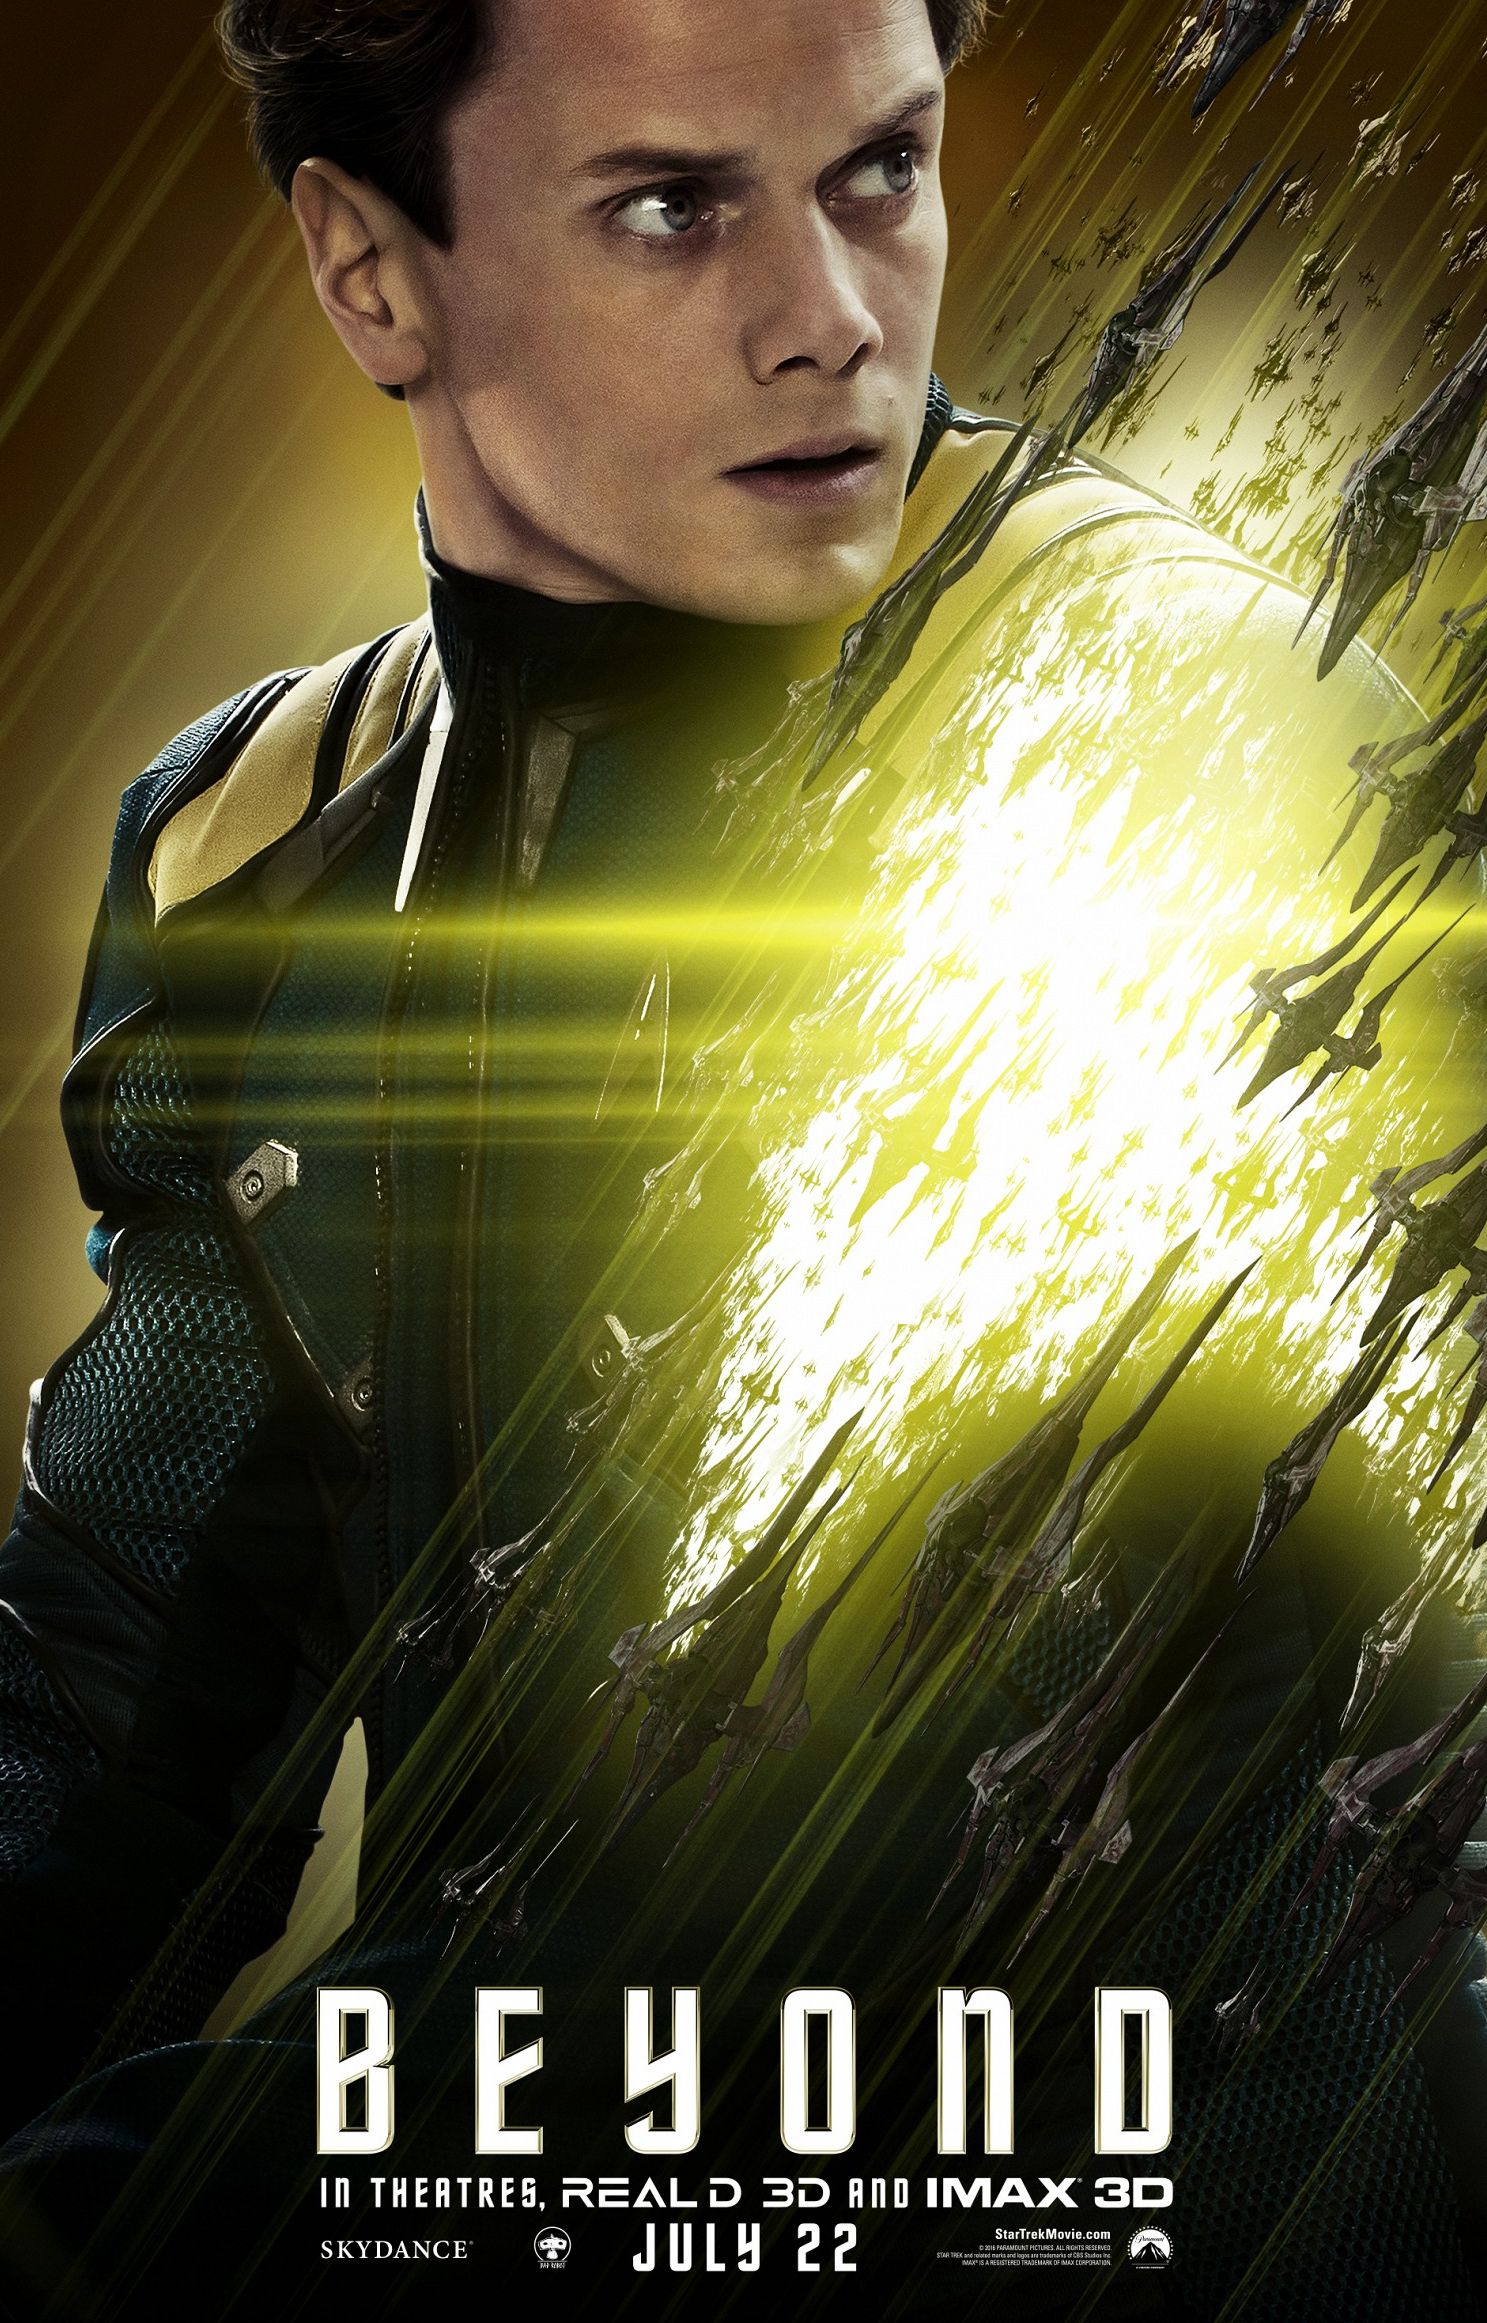 Anton Yelchin as Pavel Chekov in Star Trek Beyond Character